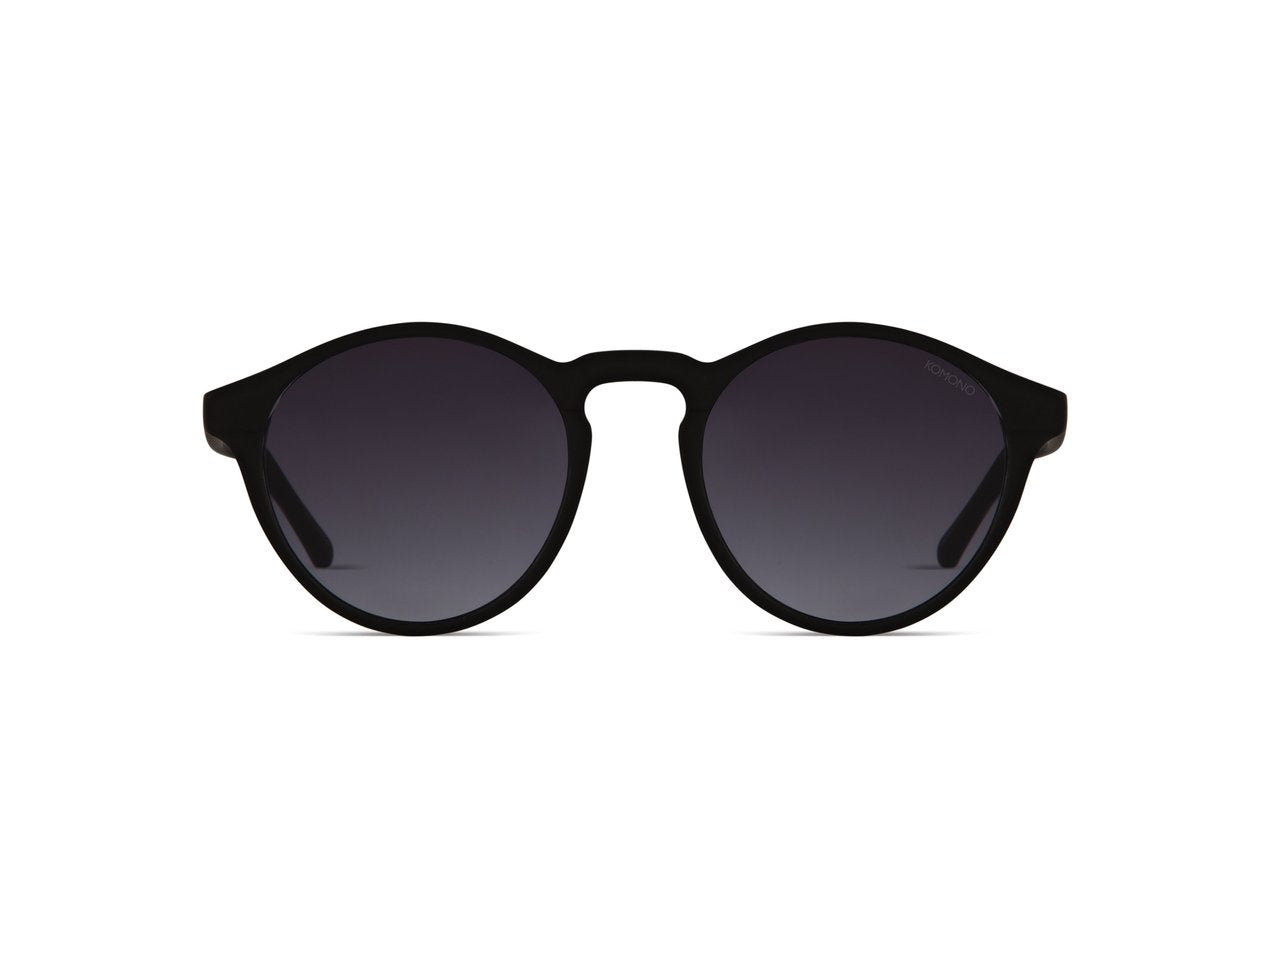 The Liam Carbon Sunglasses by Komono